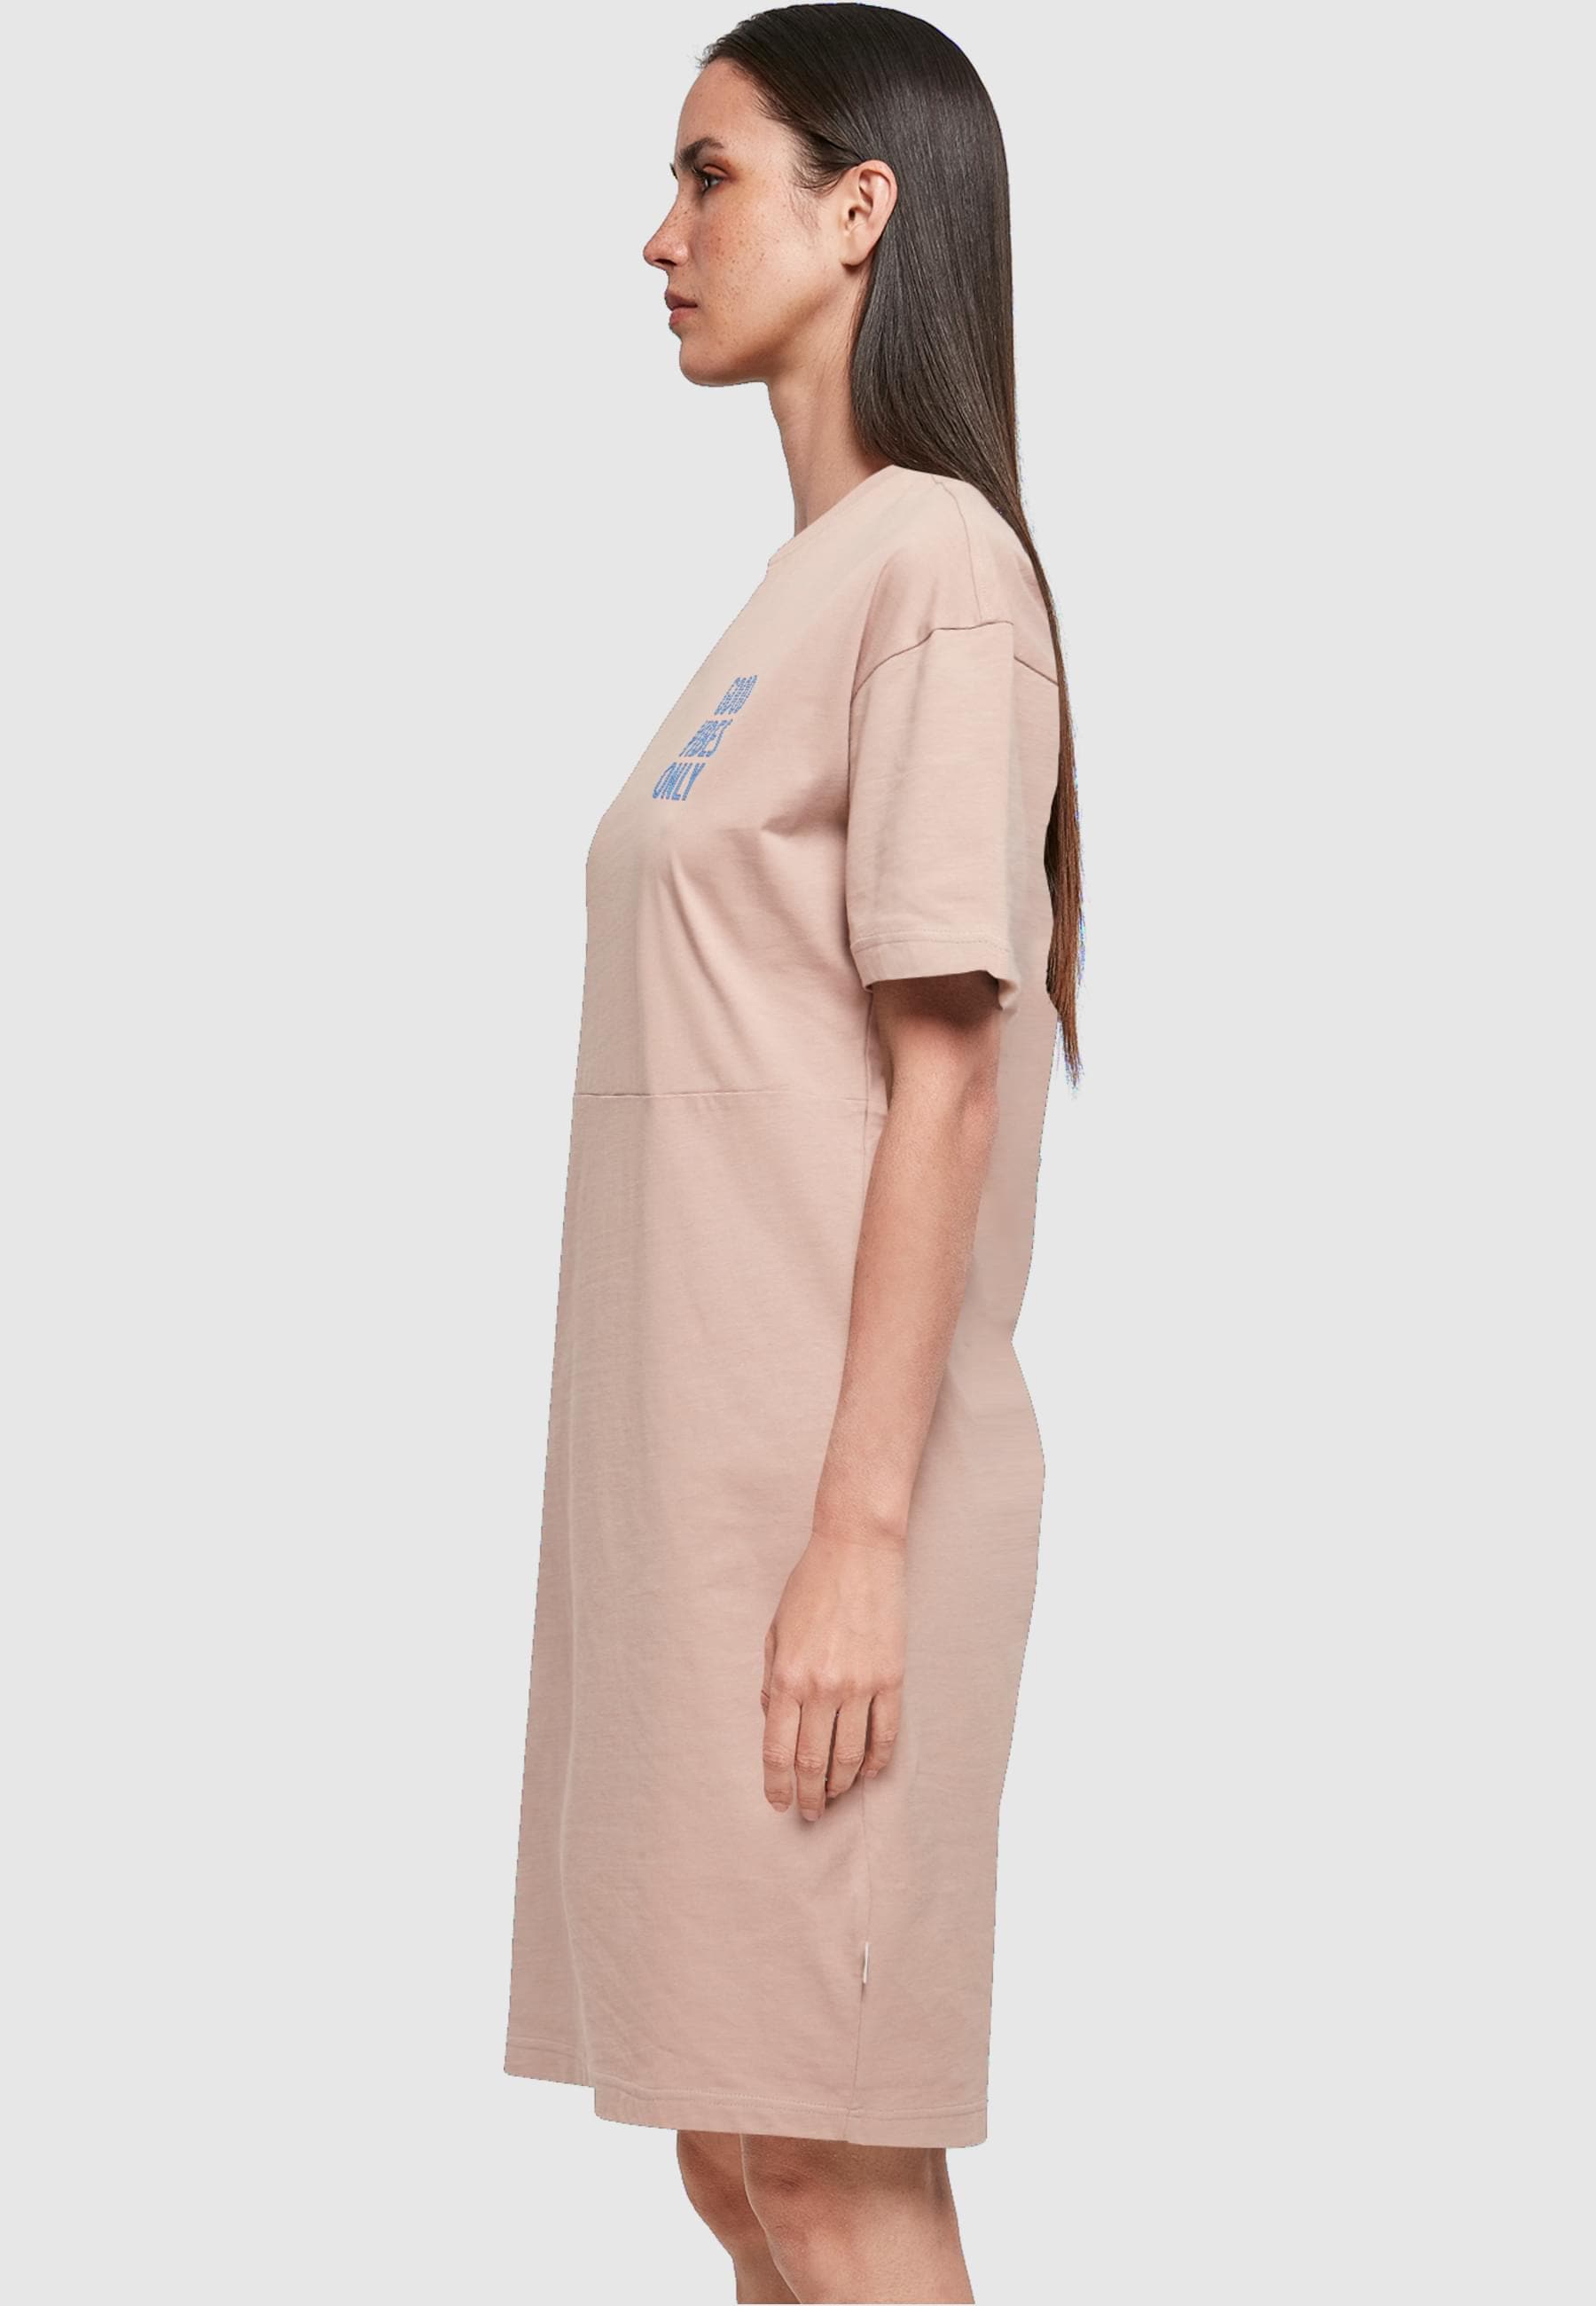 Merchcode Stillkleid »Damen Ladies Good Vibes Only Oversized Slit Tee  Dress«, (1 tlg.) online kaufen | I'm walking